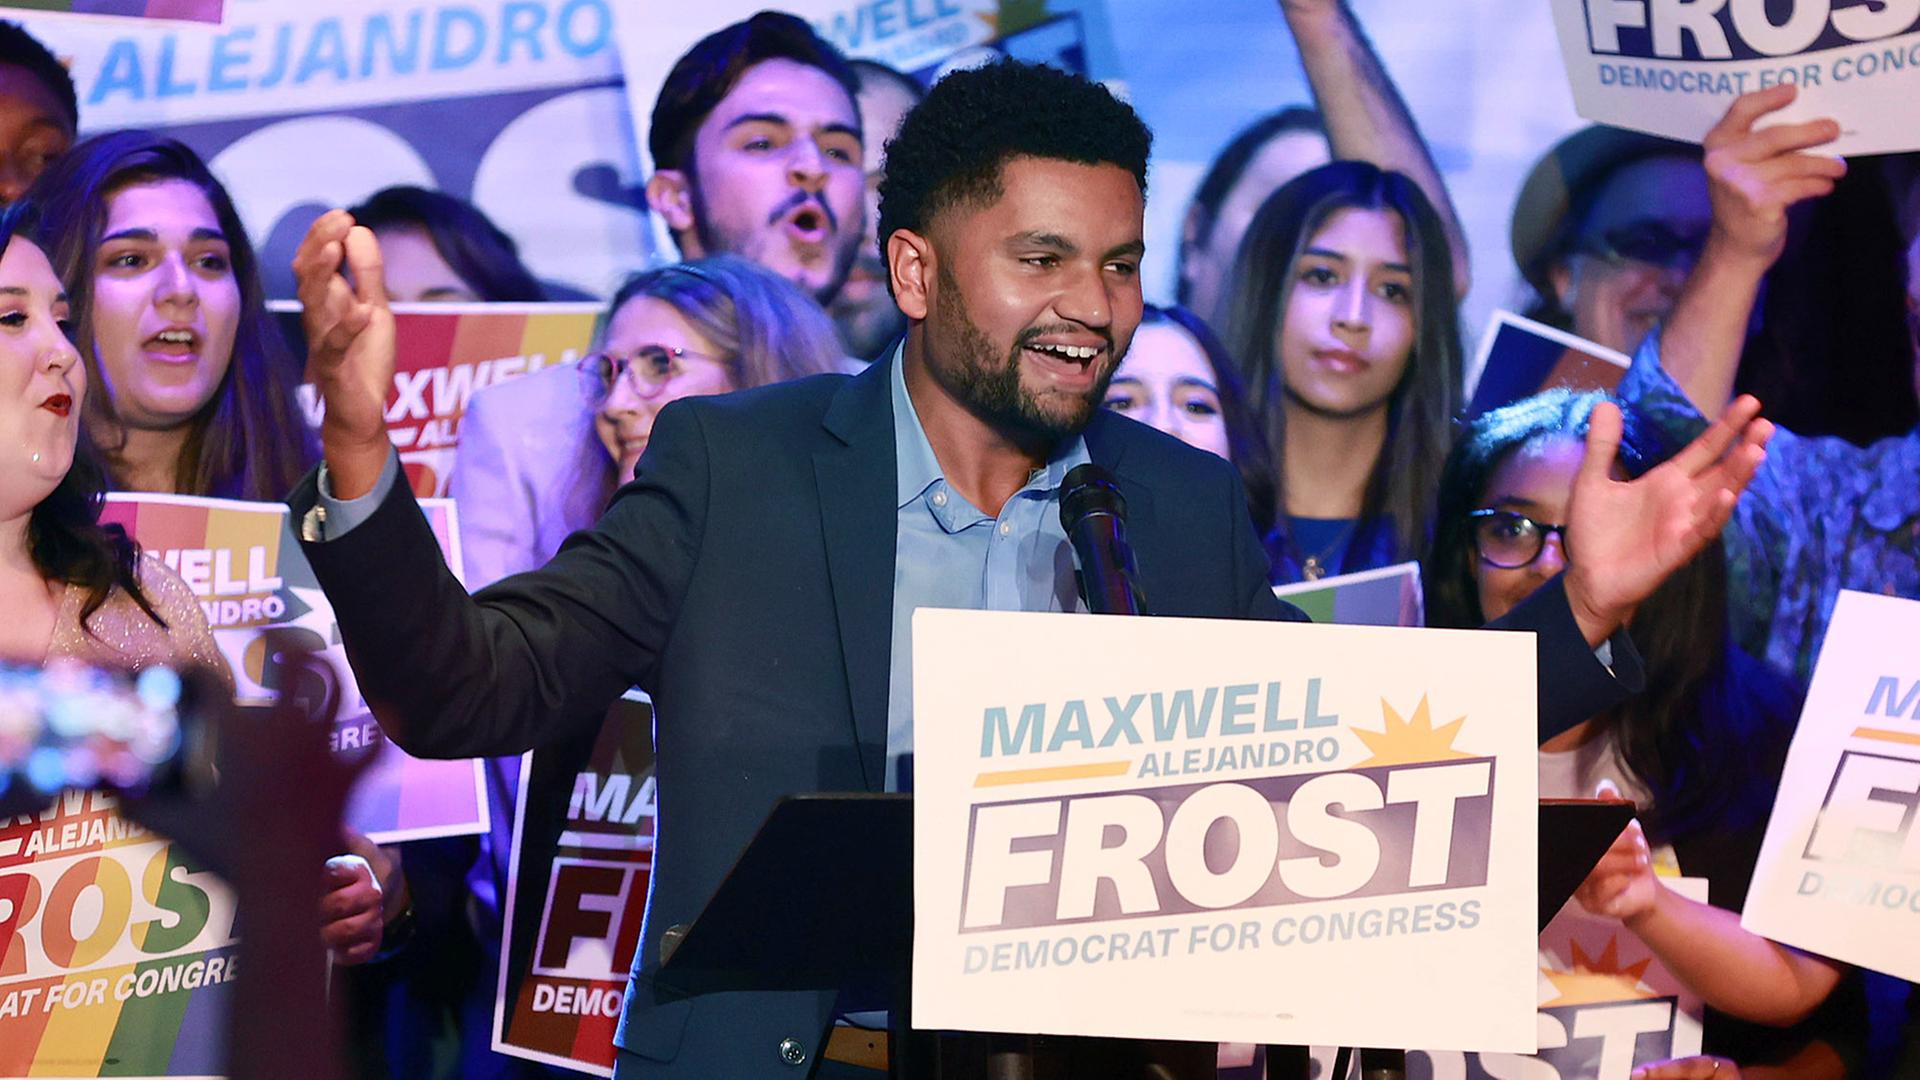 Maxwell Alejandro Frost bei einer Wahlparty in Orlando.